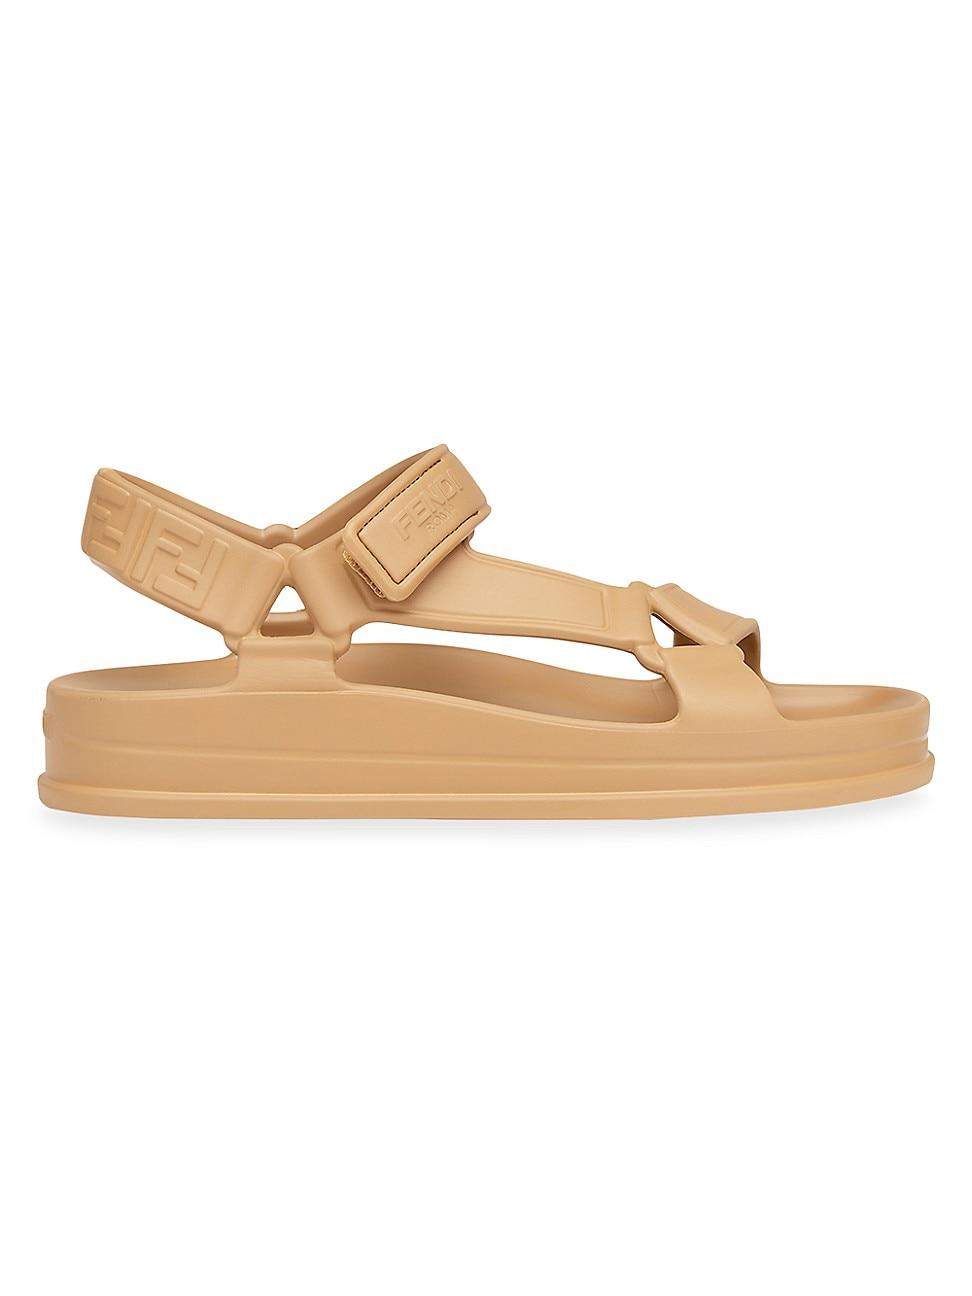 Fendi Logo Rubber Athletic Sandals in Brown | Lyst